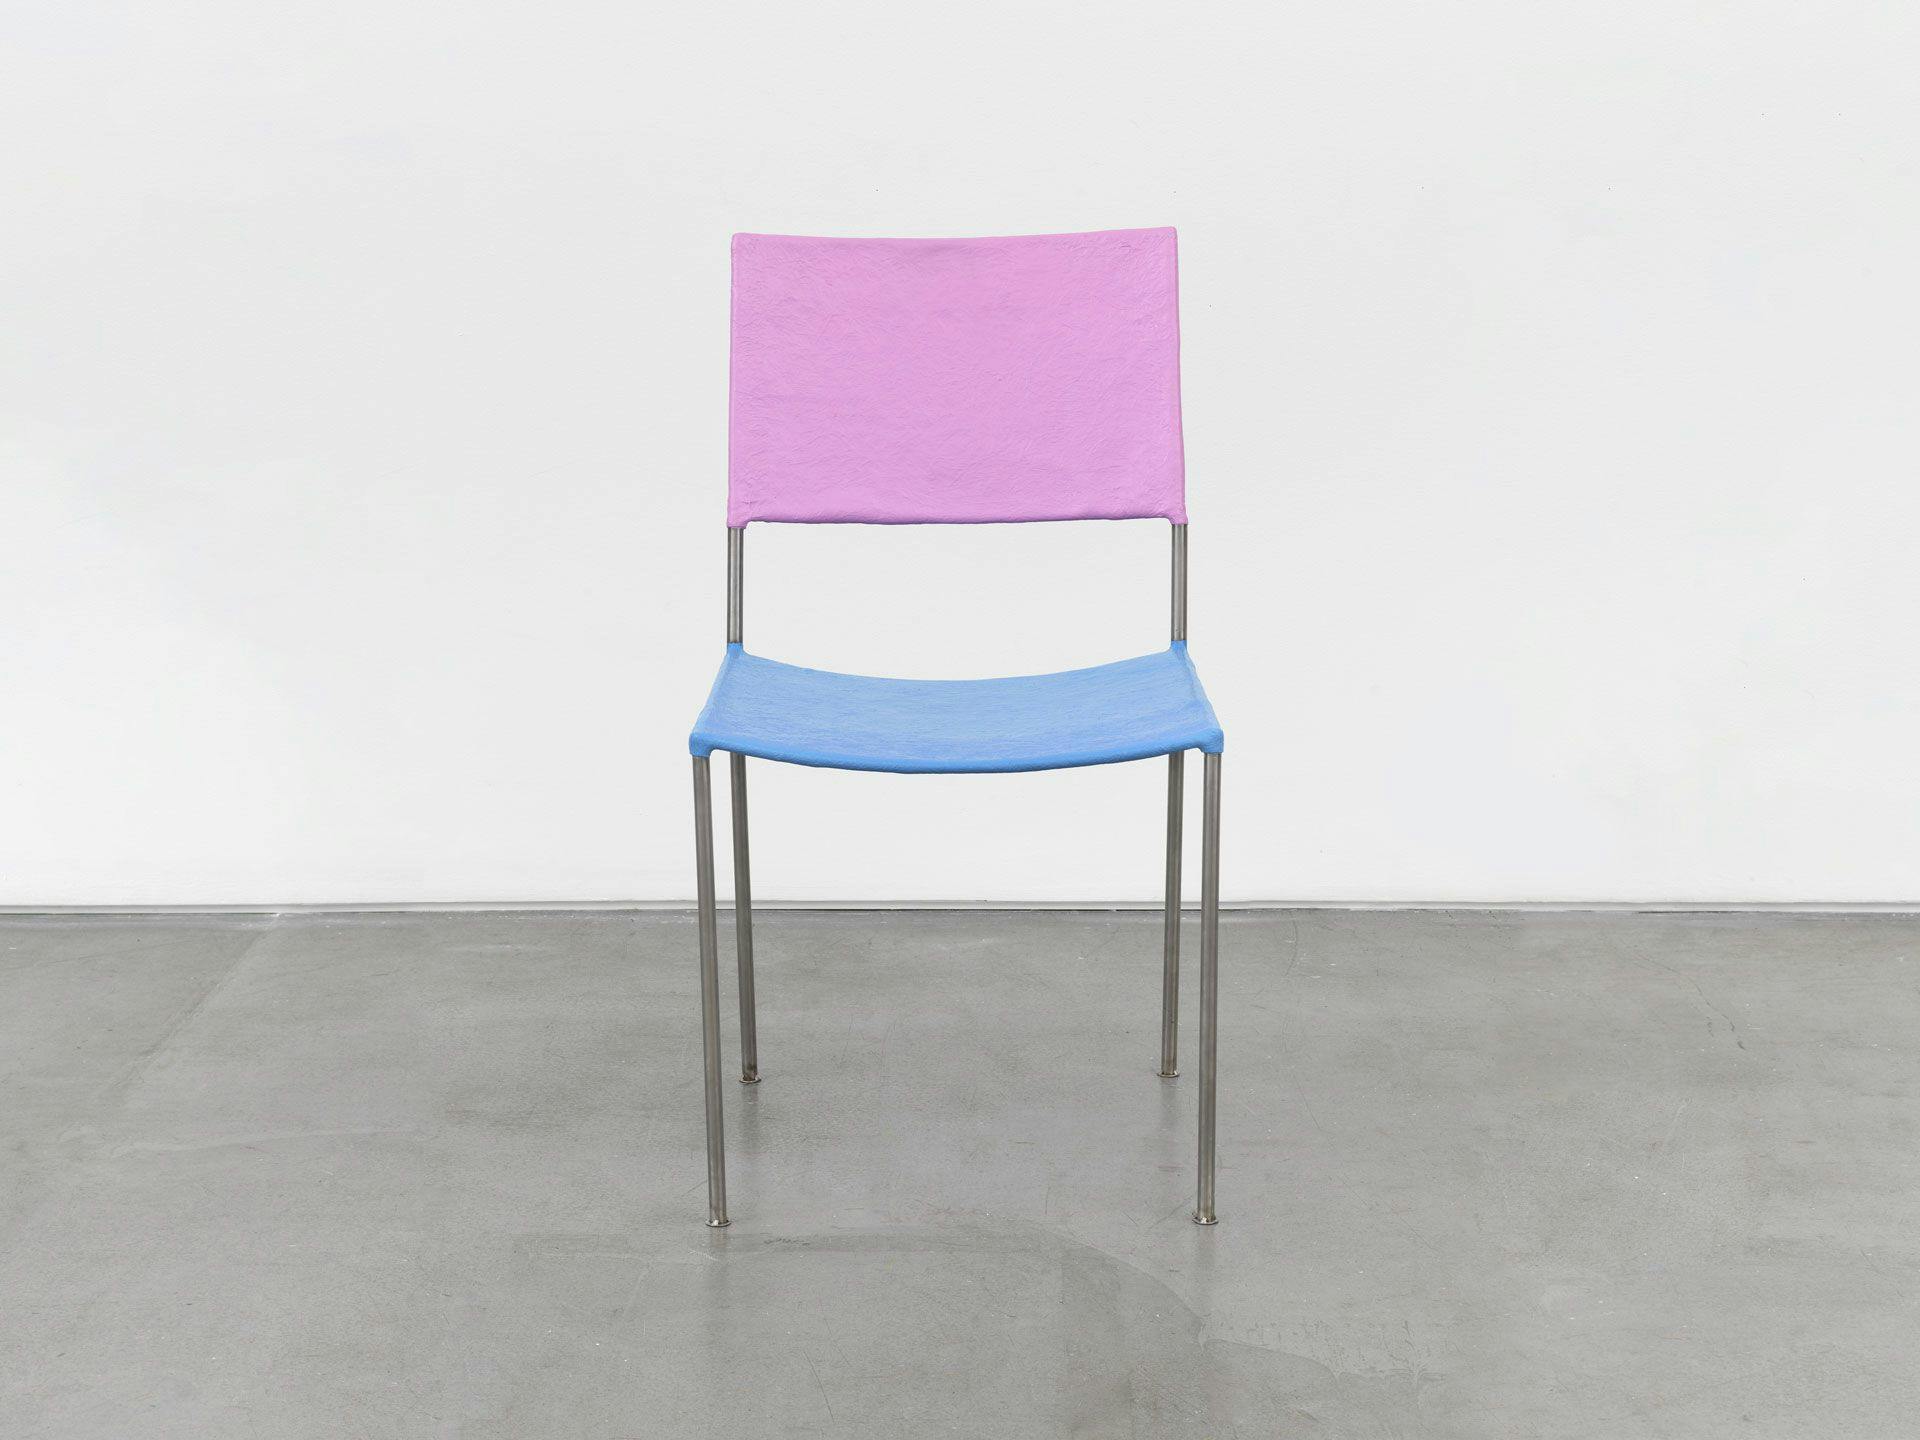 A furniture work by Franz West, titled Künstlerstuhl (Artist's Chair), dated 2006/2015